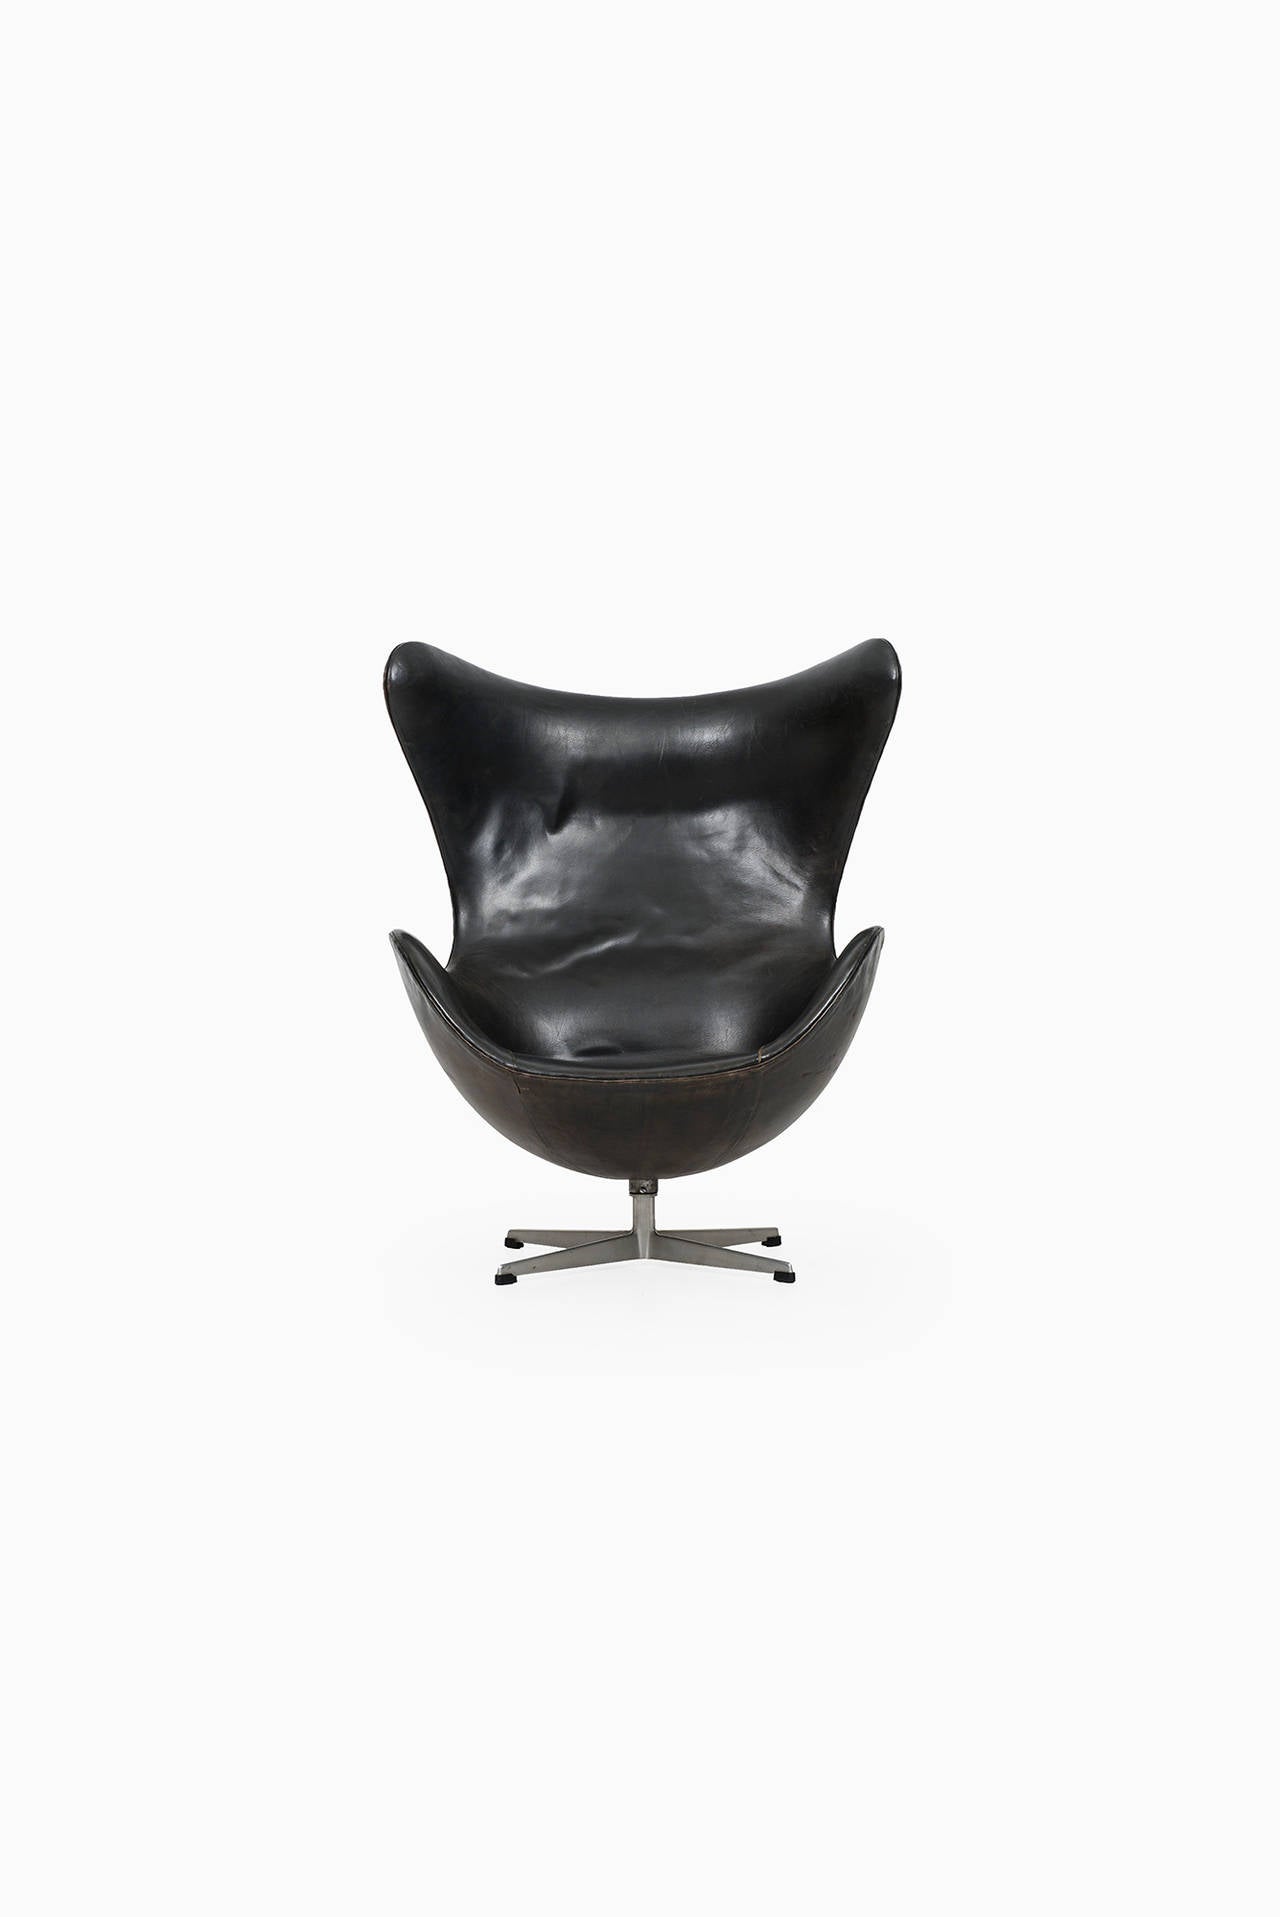 Mid-Century Modern Arne Jacobsen Early Egg Chair in Original Black Leather by Fritz Hansen